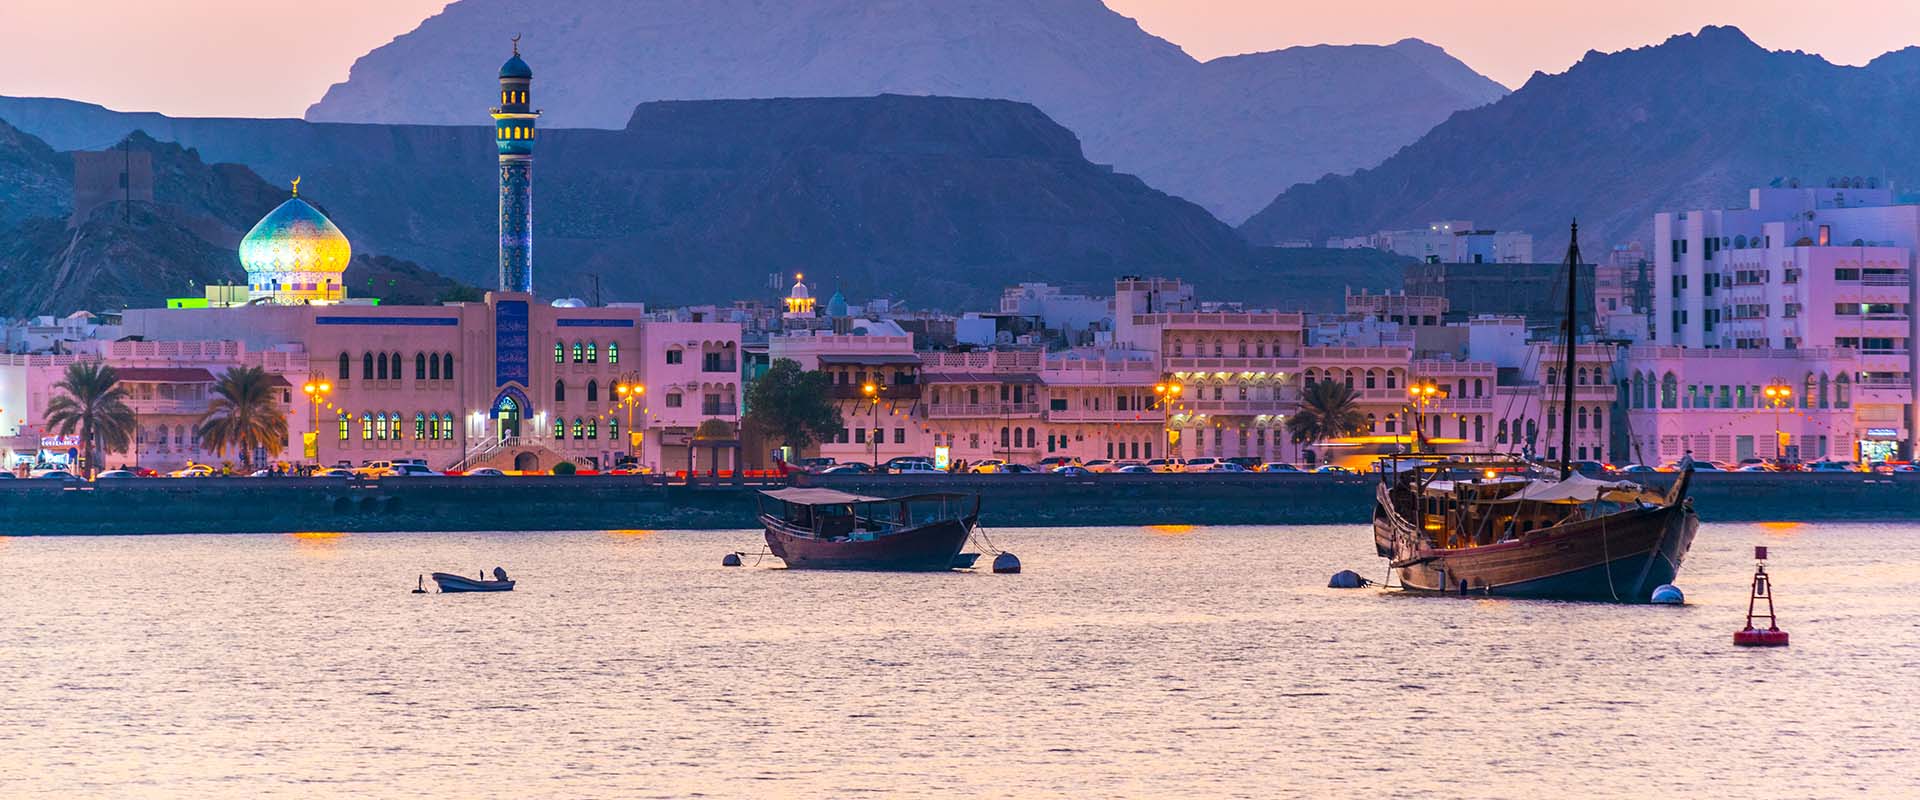 Adventure Cruise Ships in Oman - LiveAboard.com